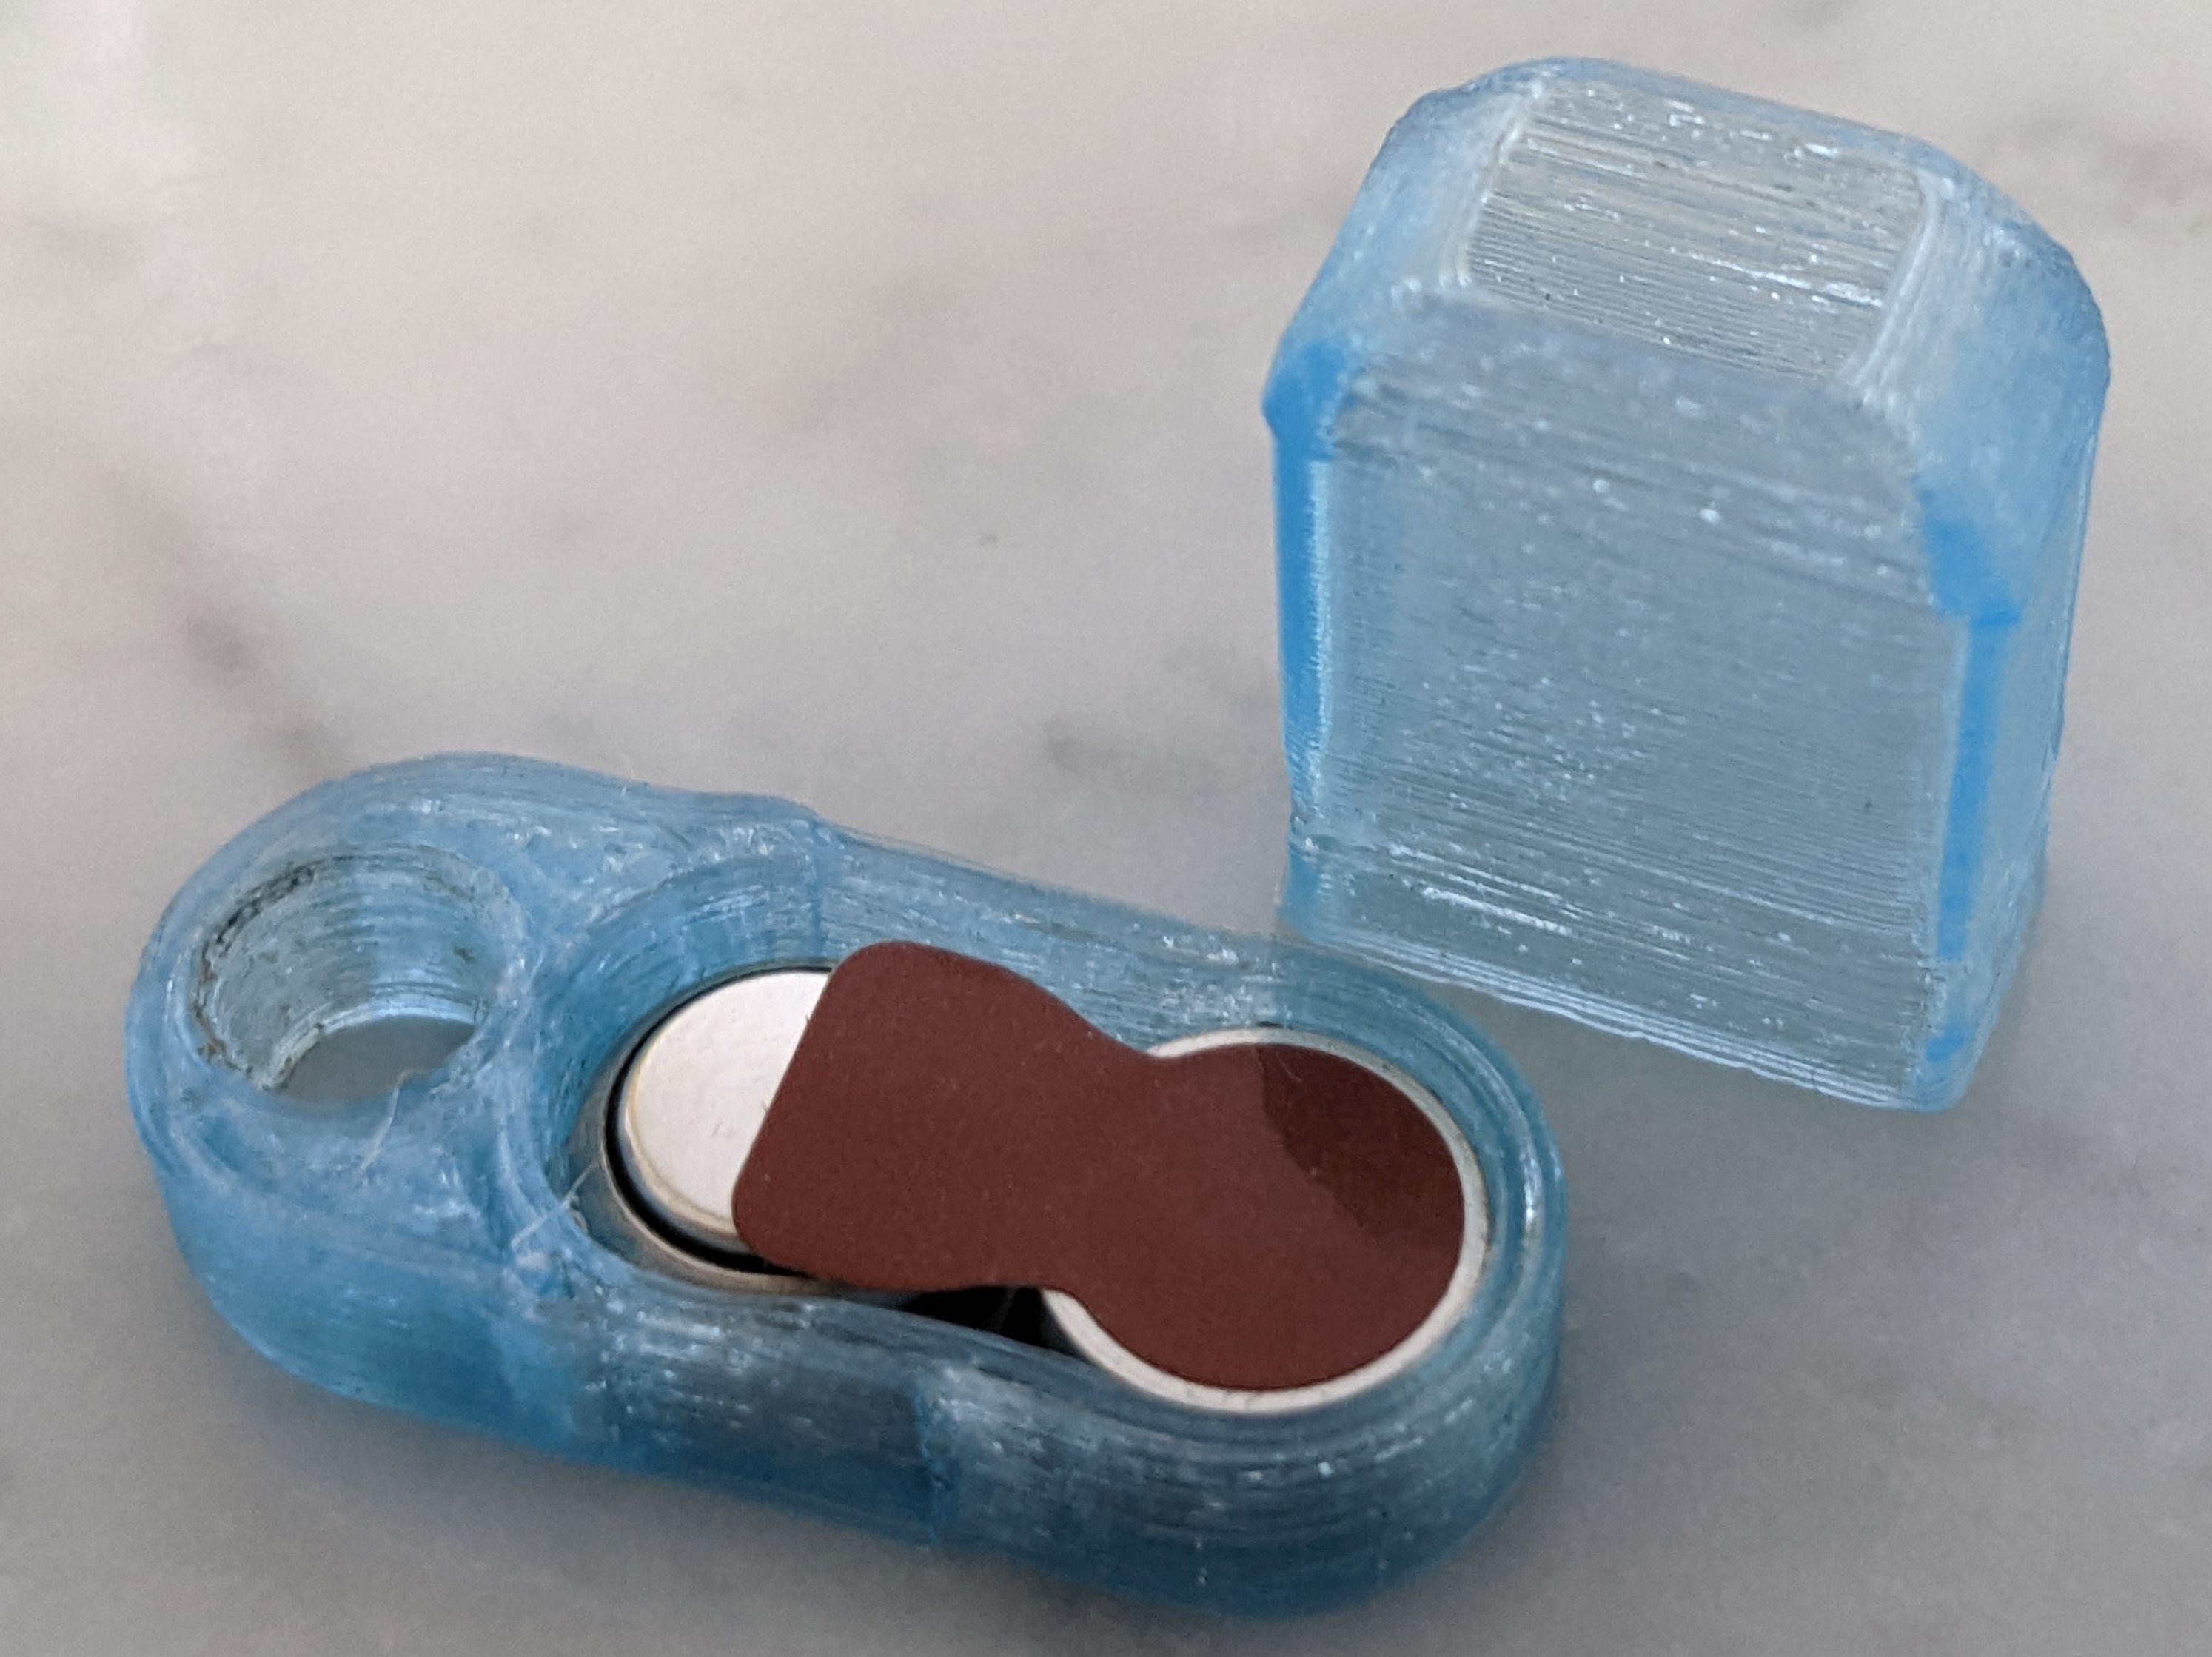 Minimalistic keychain box for hearing aid batteries